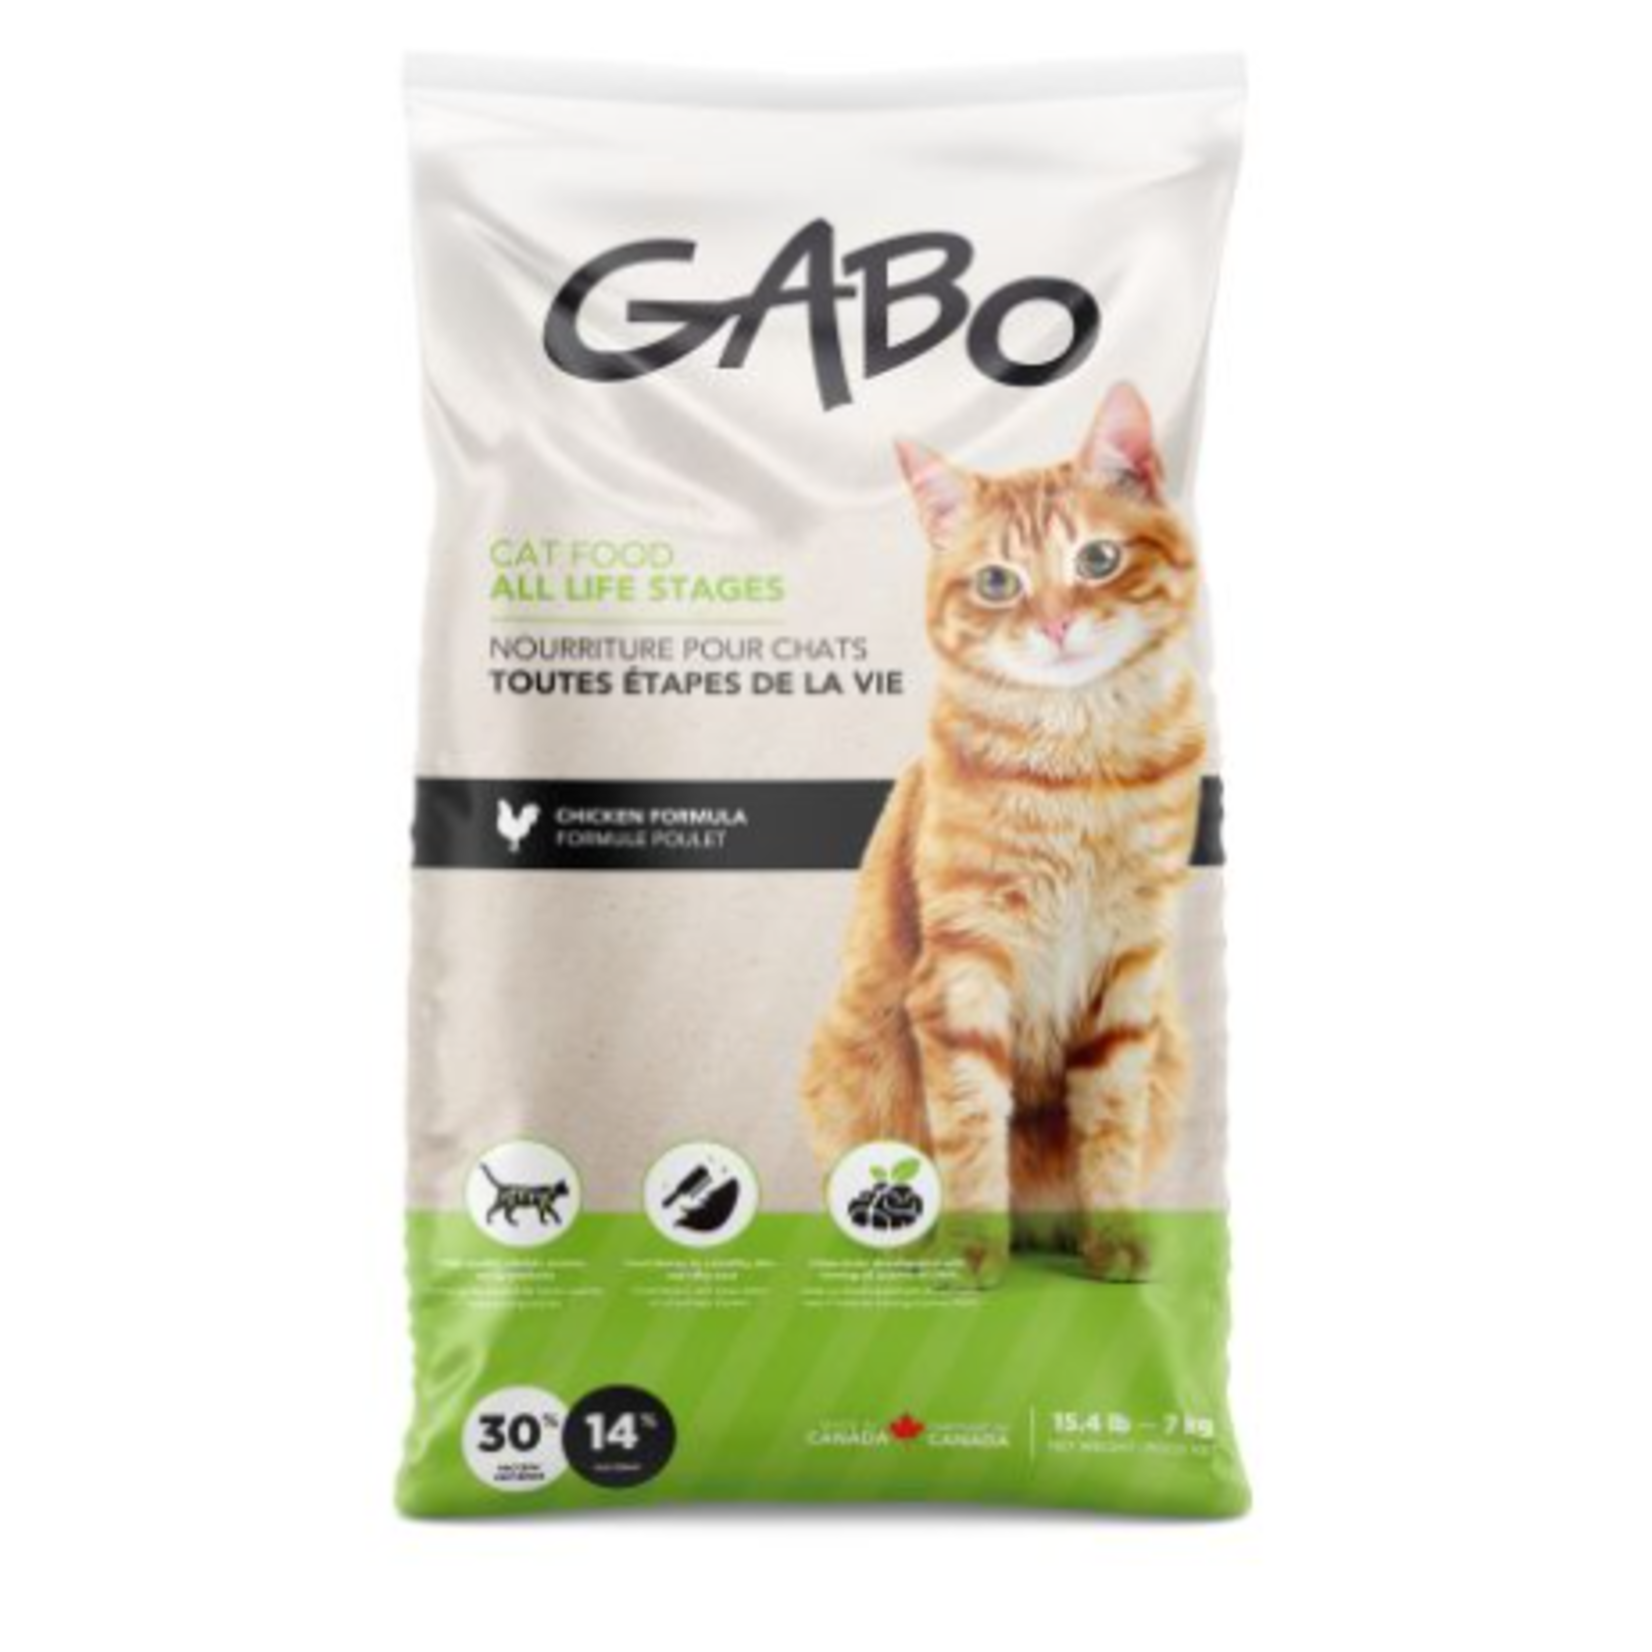 Gabo Cat and Kitten Food - Chicken - 15.4 lbs